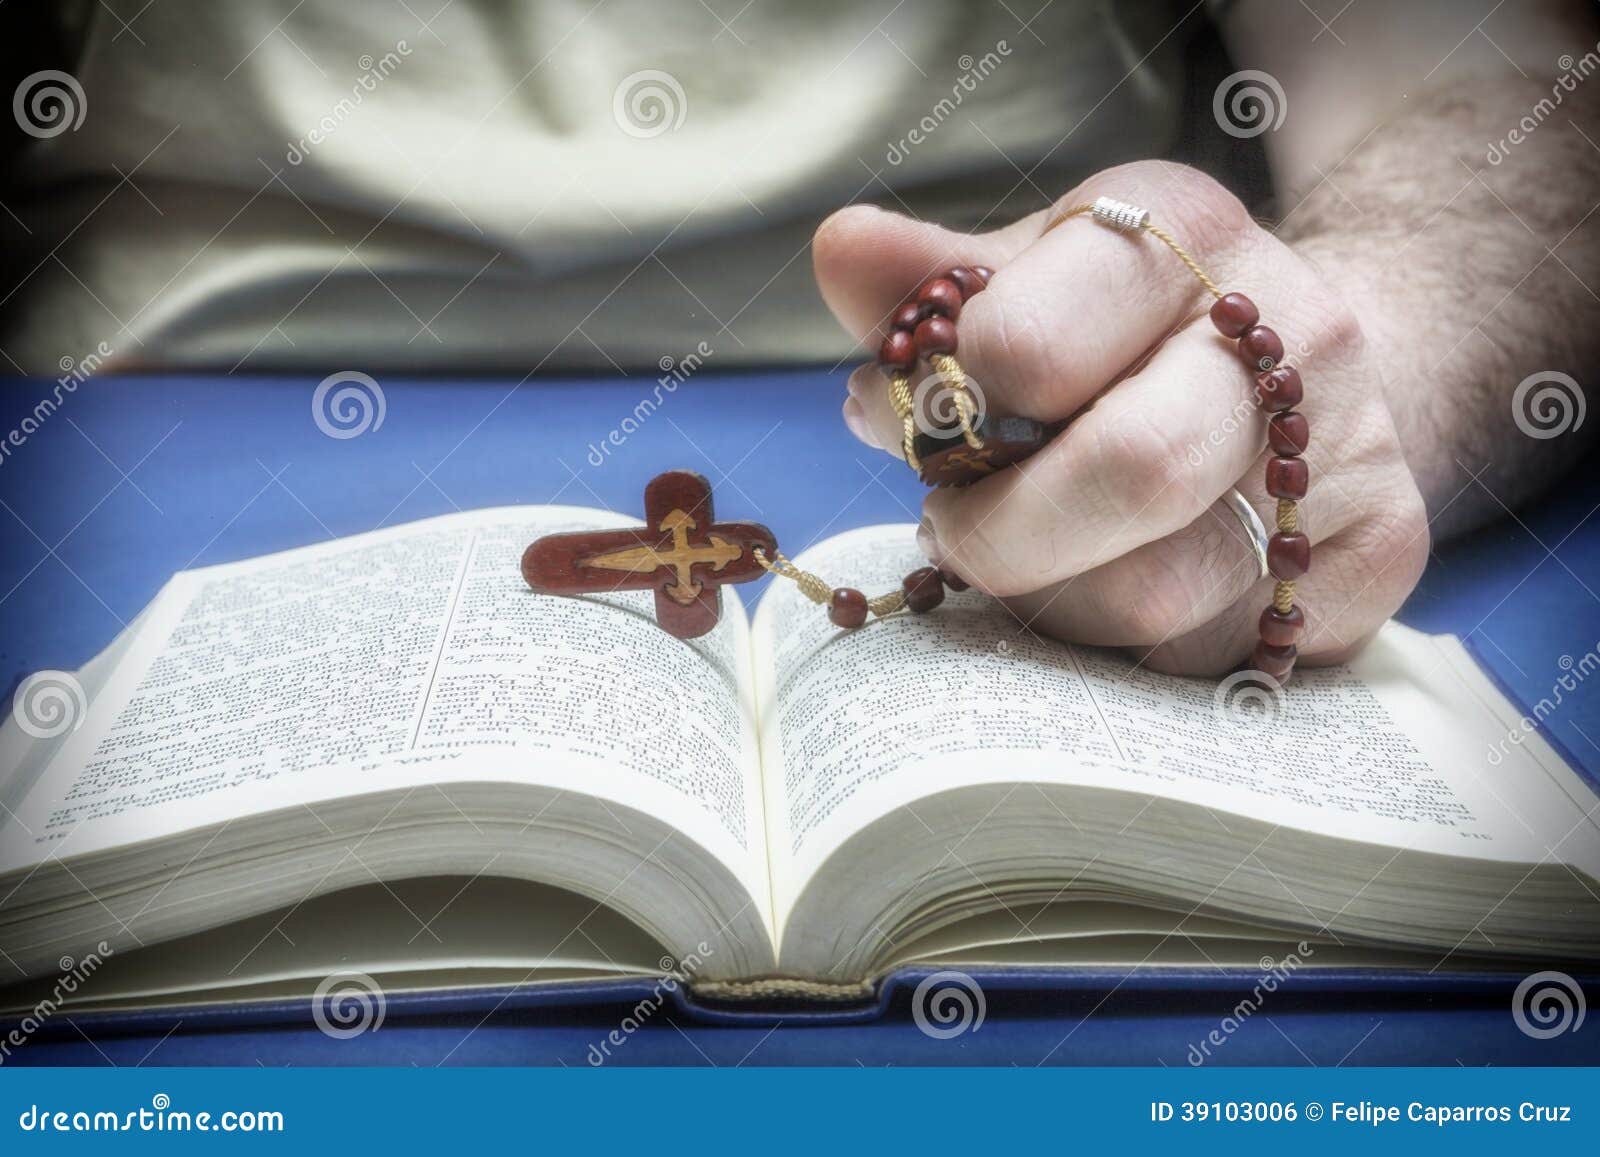 christian believer praying to god